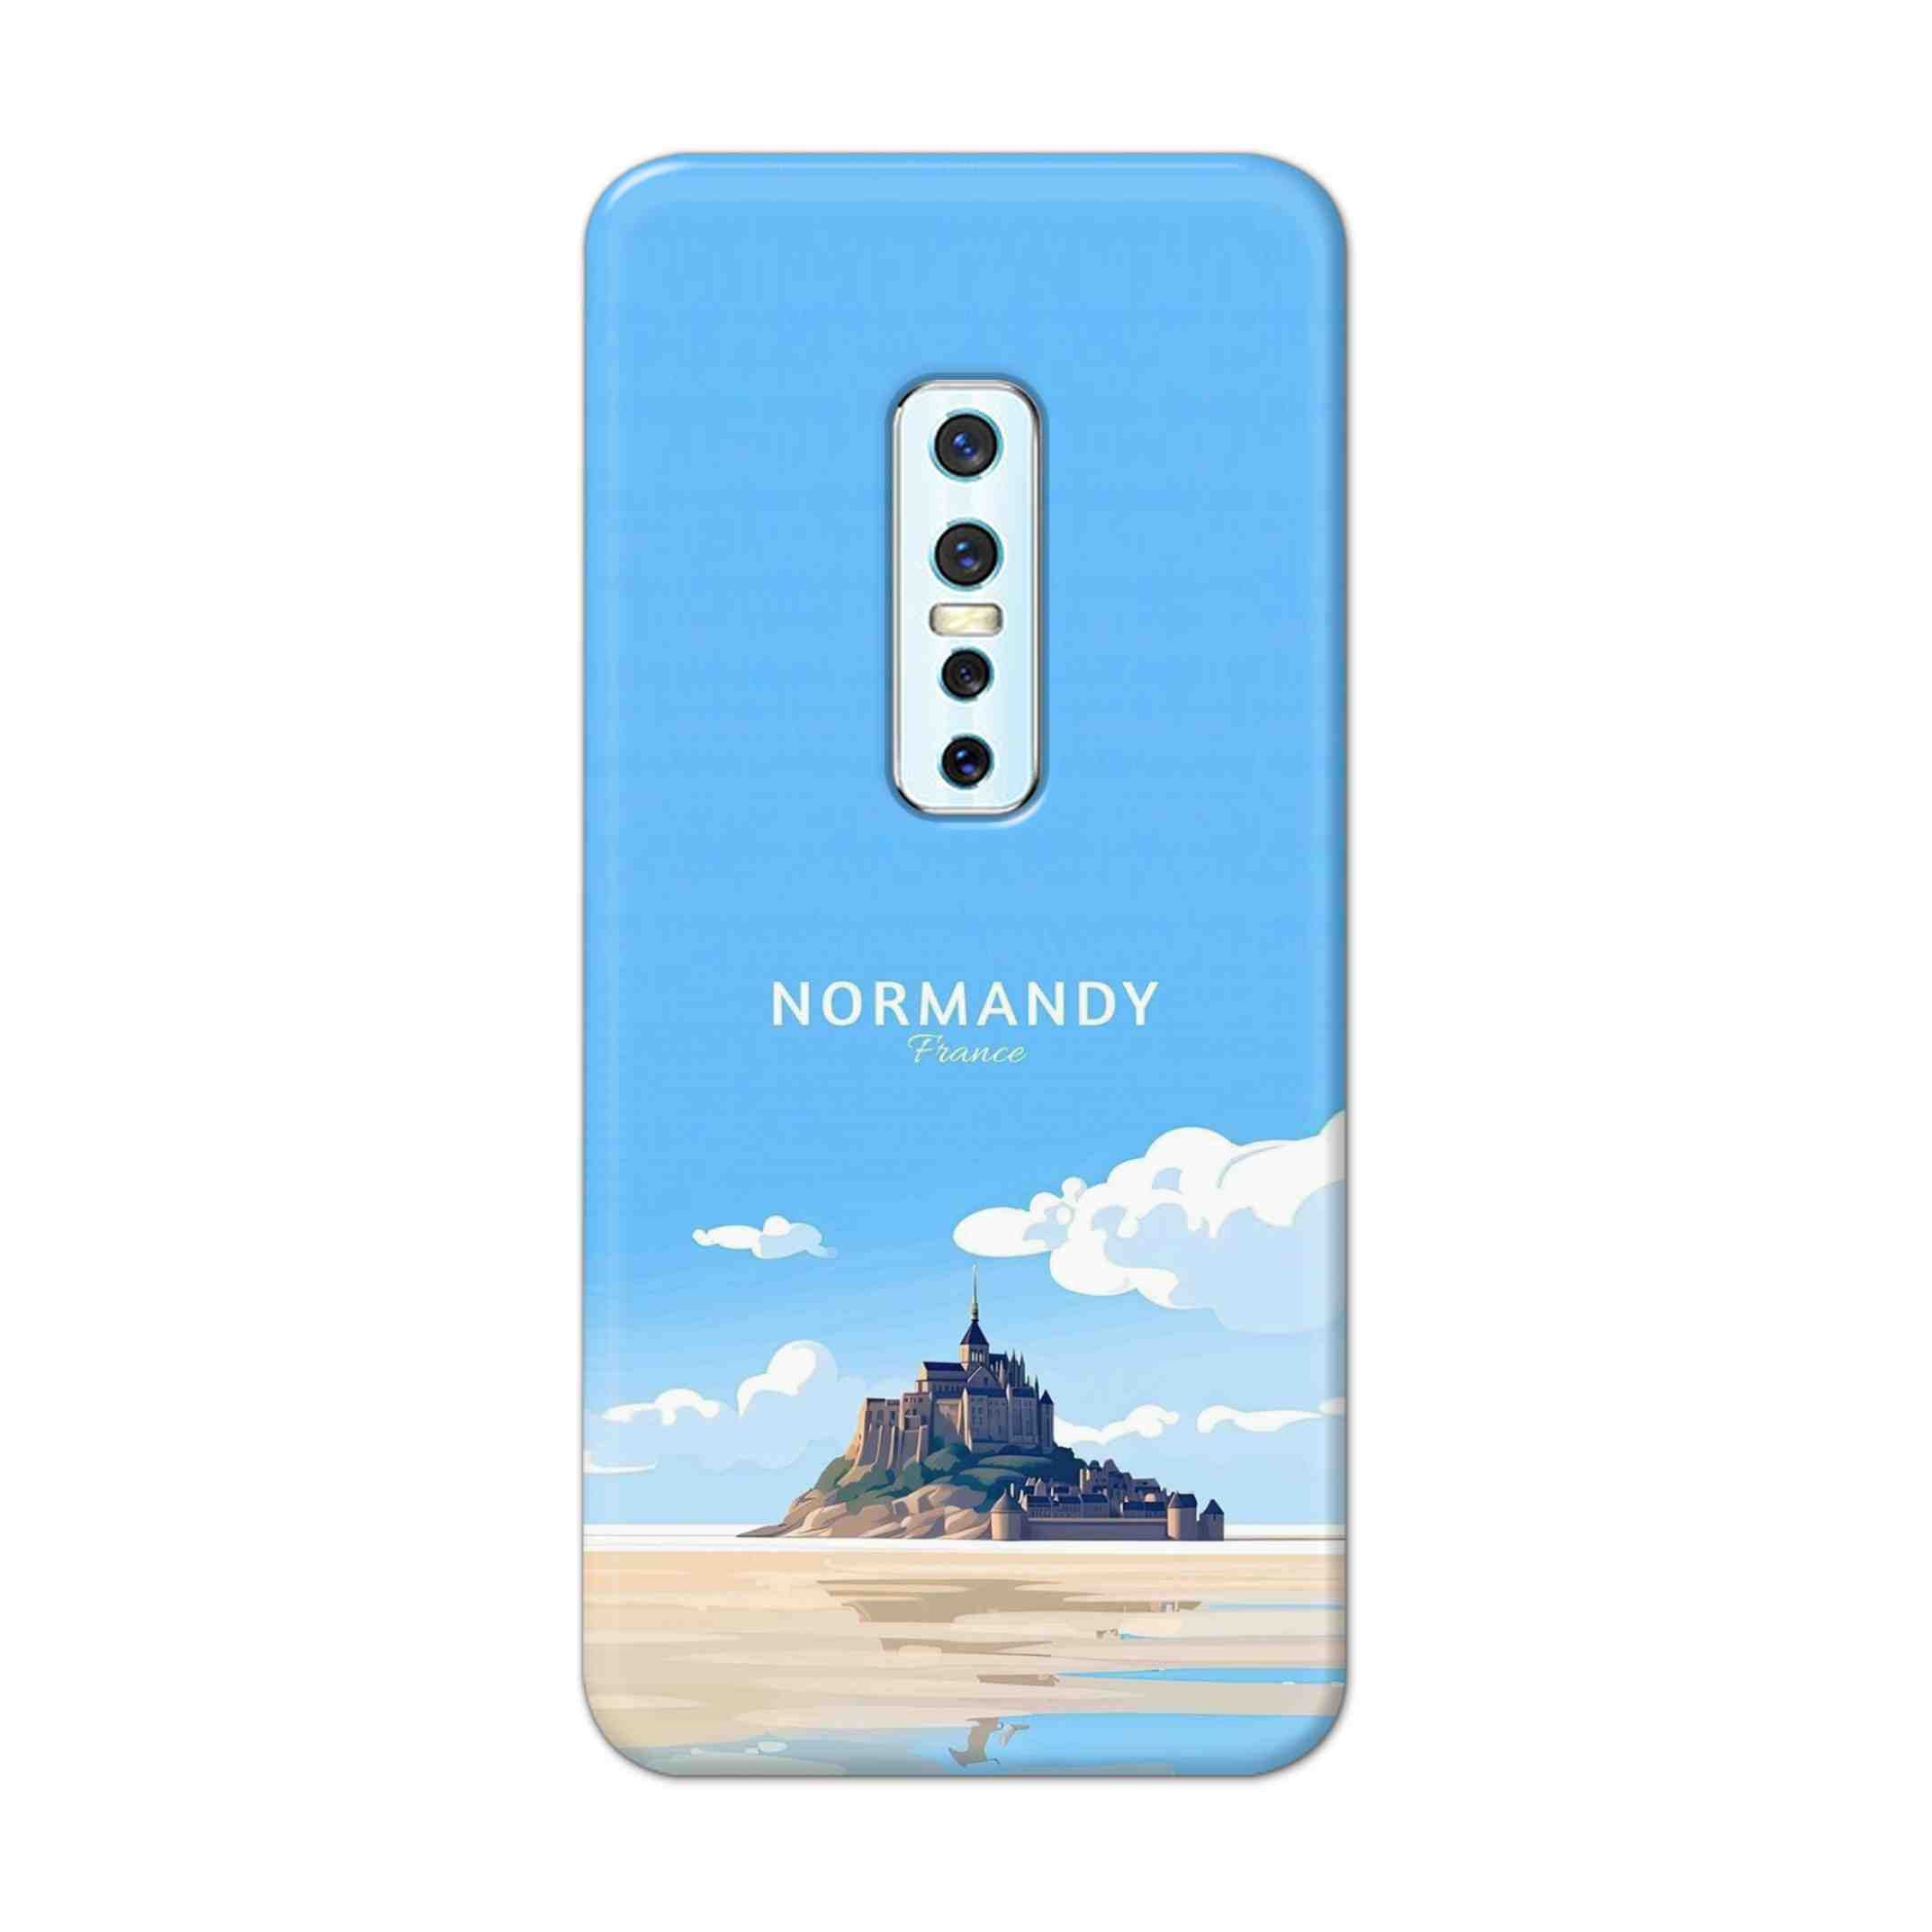 Buy Normandy Hard Back Mobile Phone Case Cover For Vivo V17 Pro Online